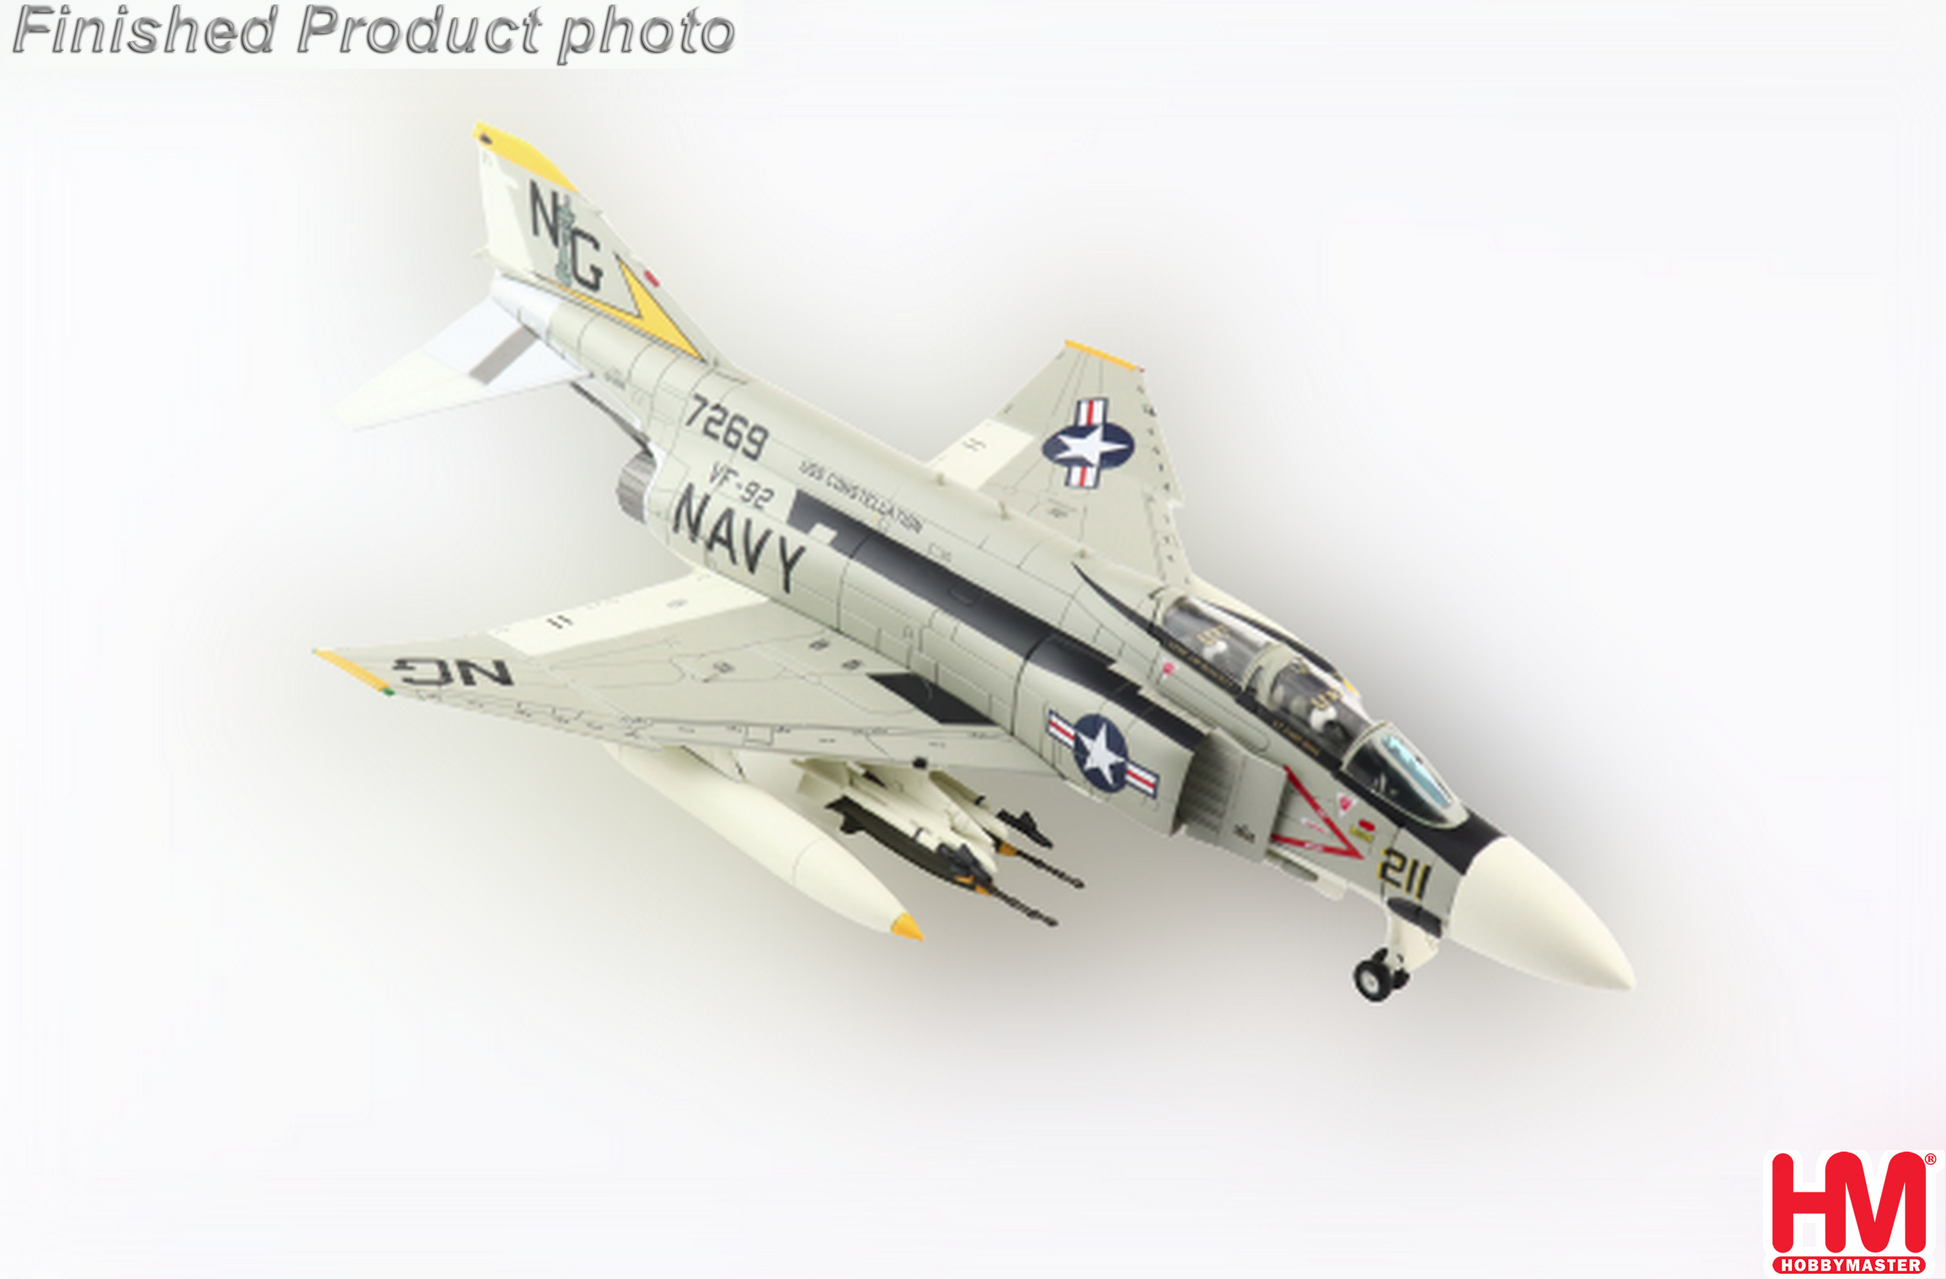 F-4J Phantom II US Navy